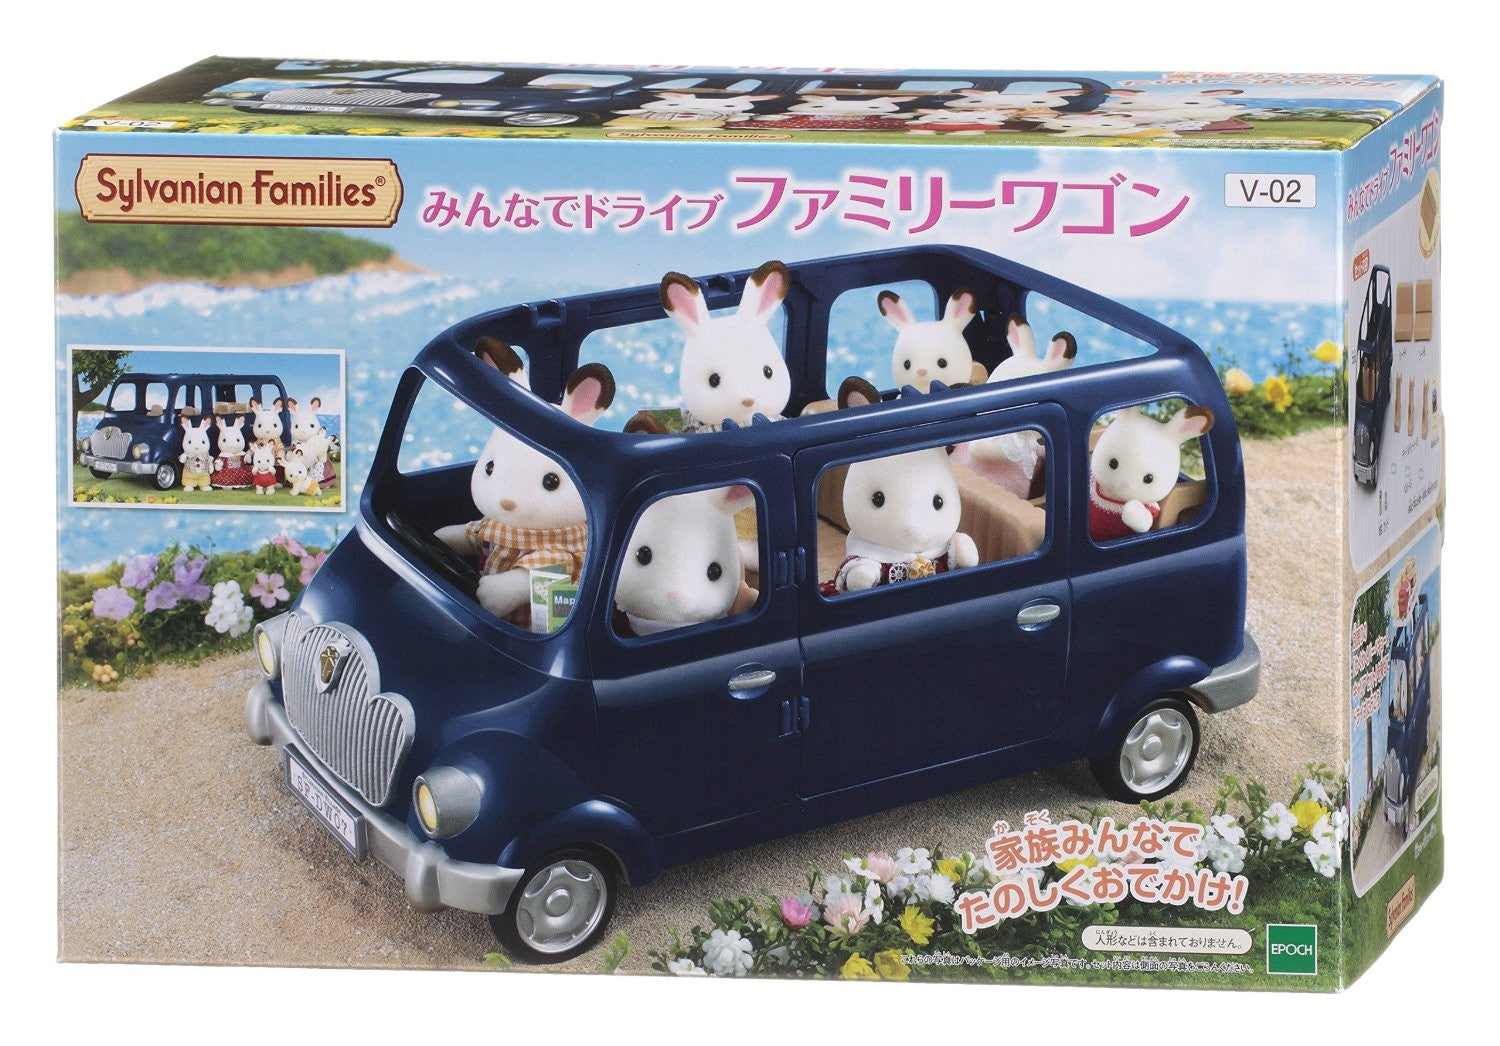 Sylvanian Families Everyone Drive Family Wagon Car V-02 Blue Japan Epo –  VeryGoods.JP